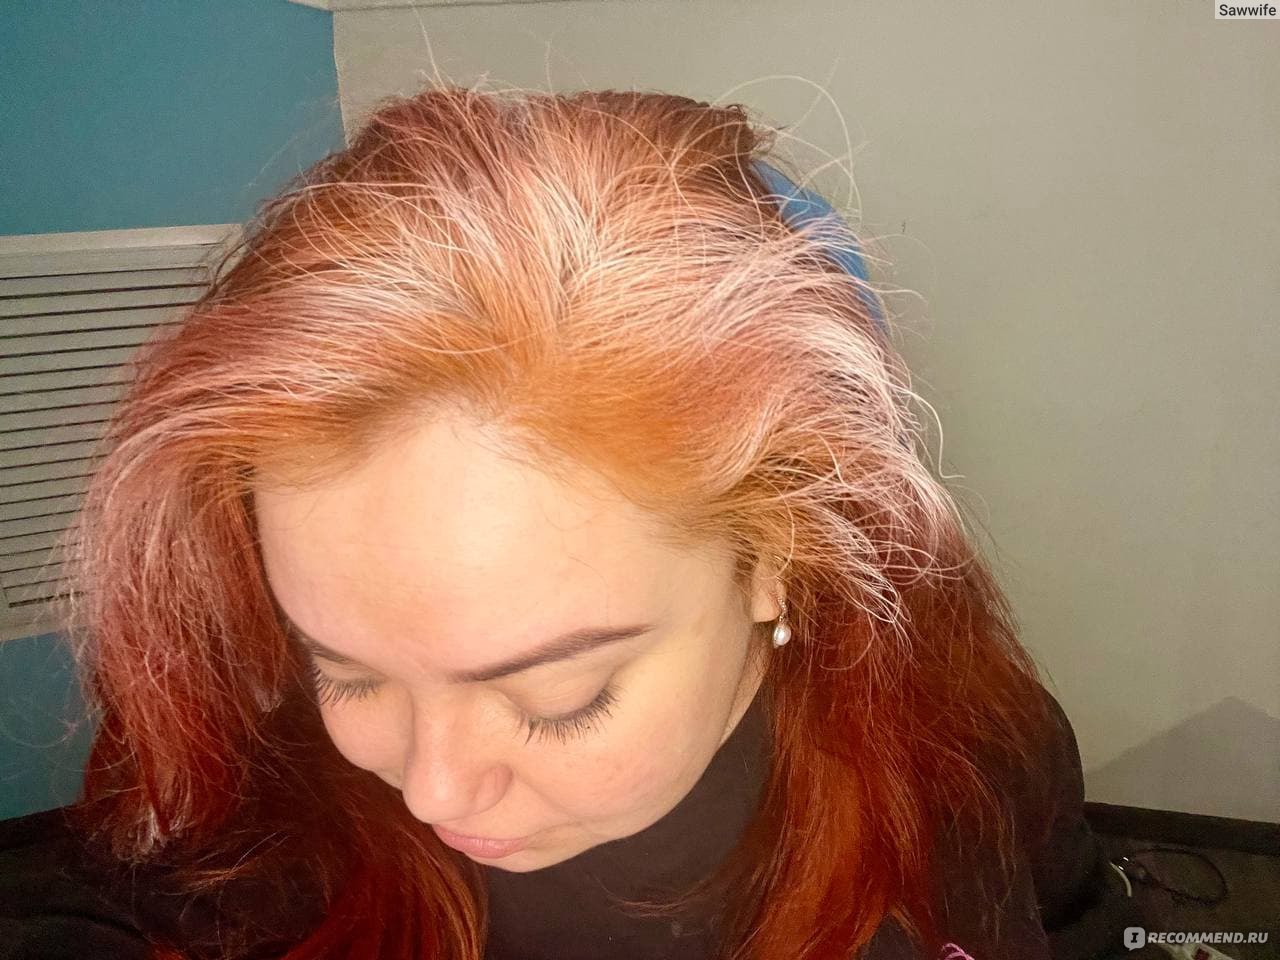 Волосы после сухого шампуня. Сухой шампунь для рыжих волос. Батиста сухой шампунь для рыжих. 8.76 На рыжие волосы. Батист для окраски волос.